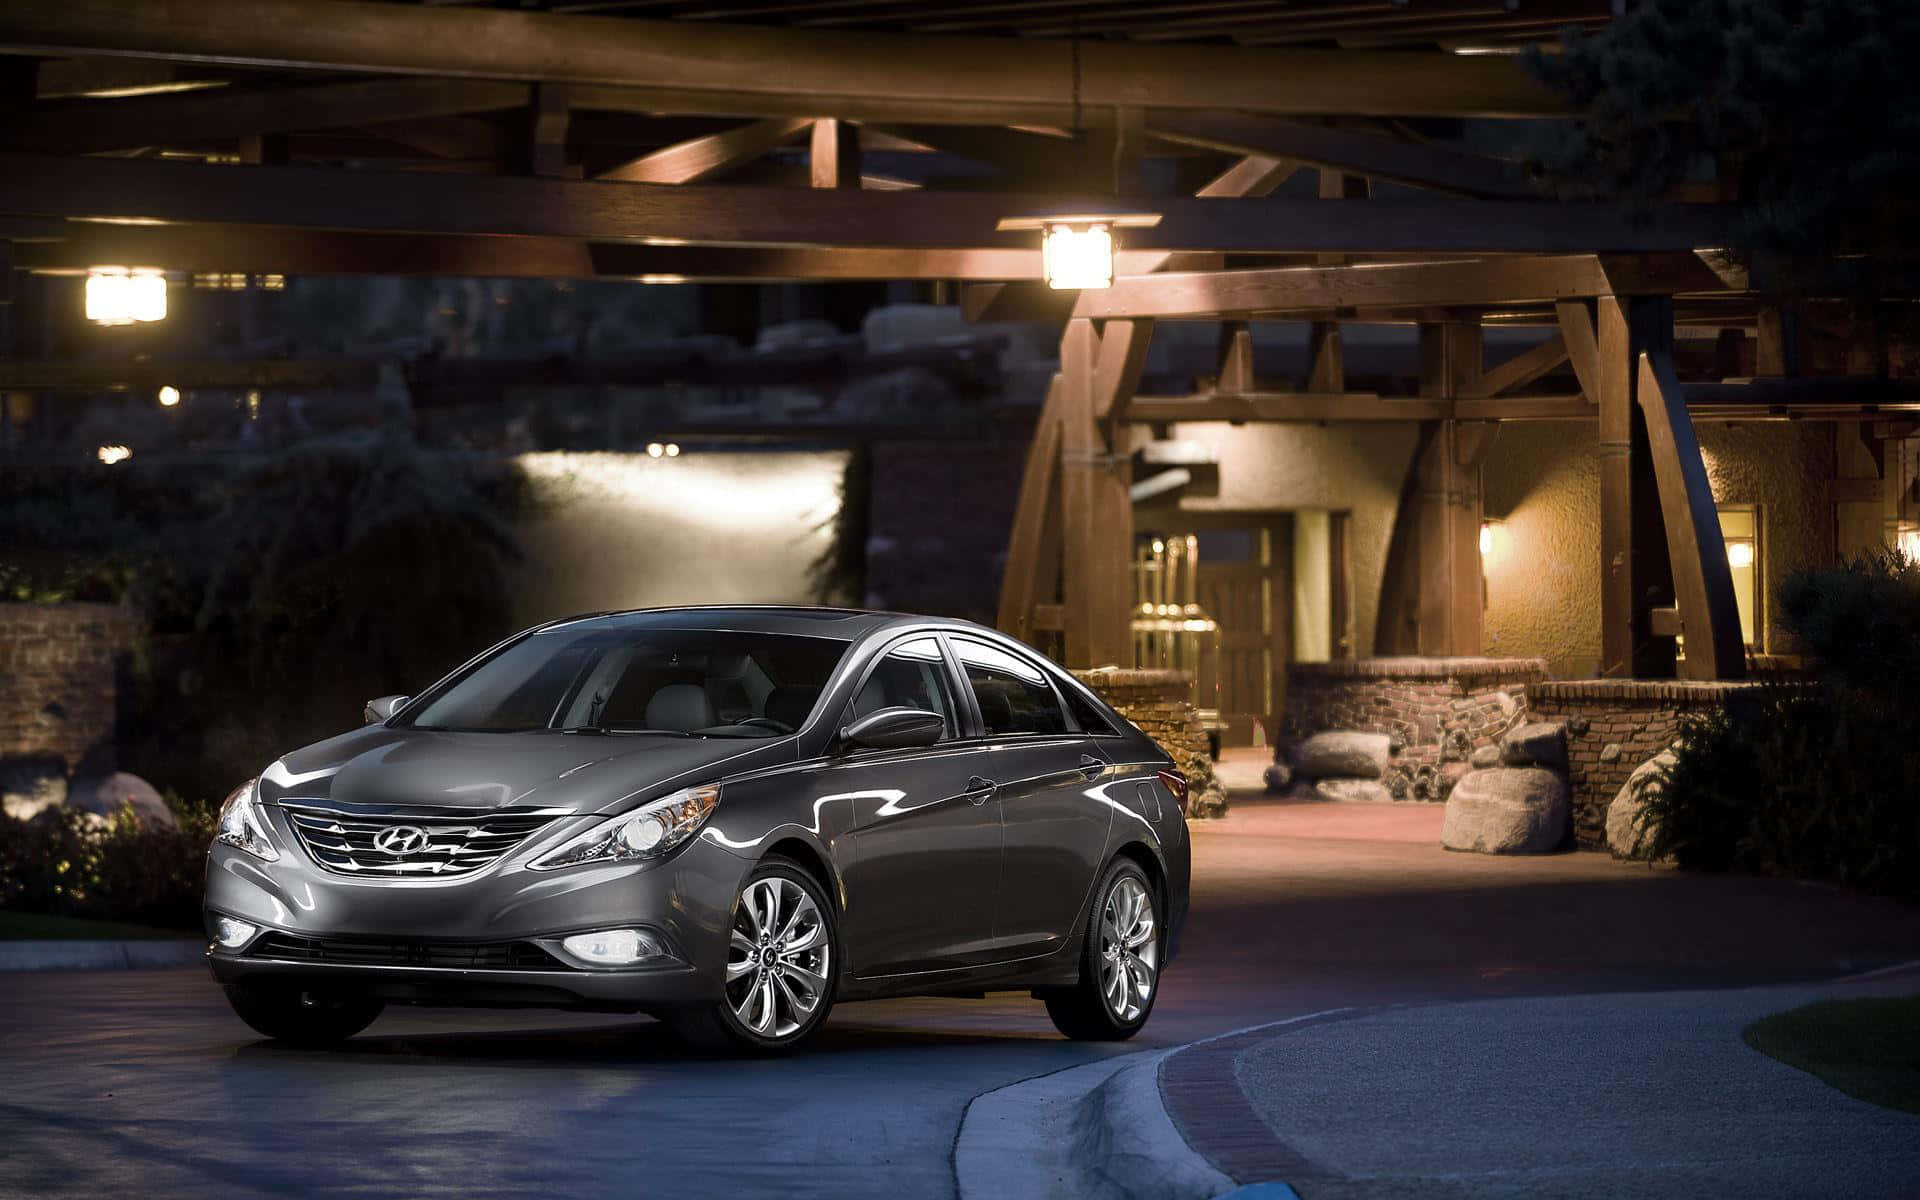 Sleek Hyundai Sonata on a relaxing drive Wallpaper